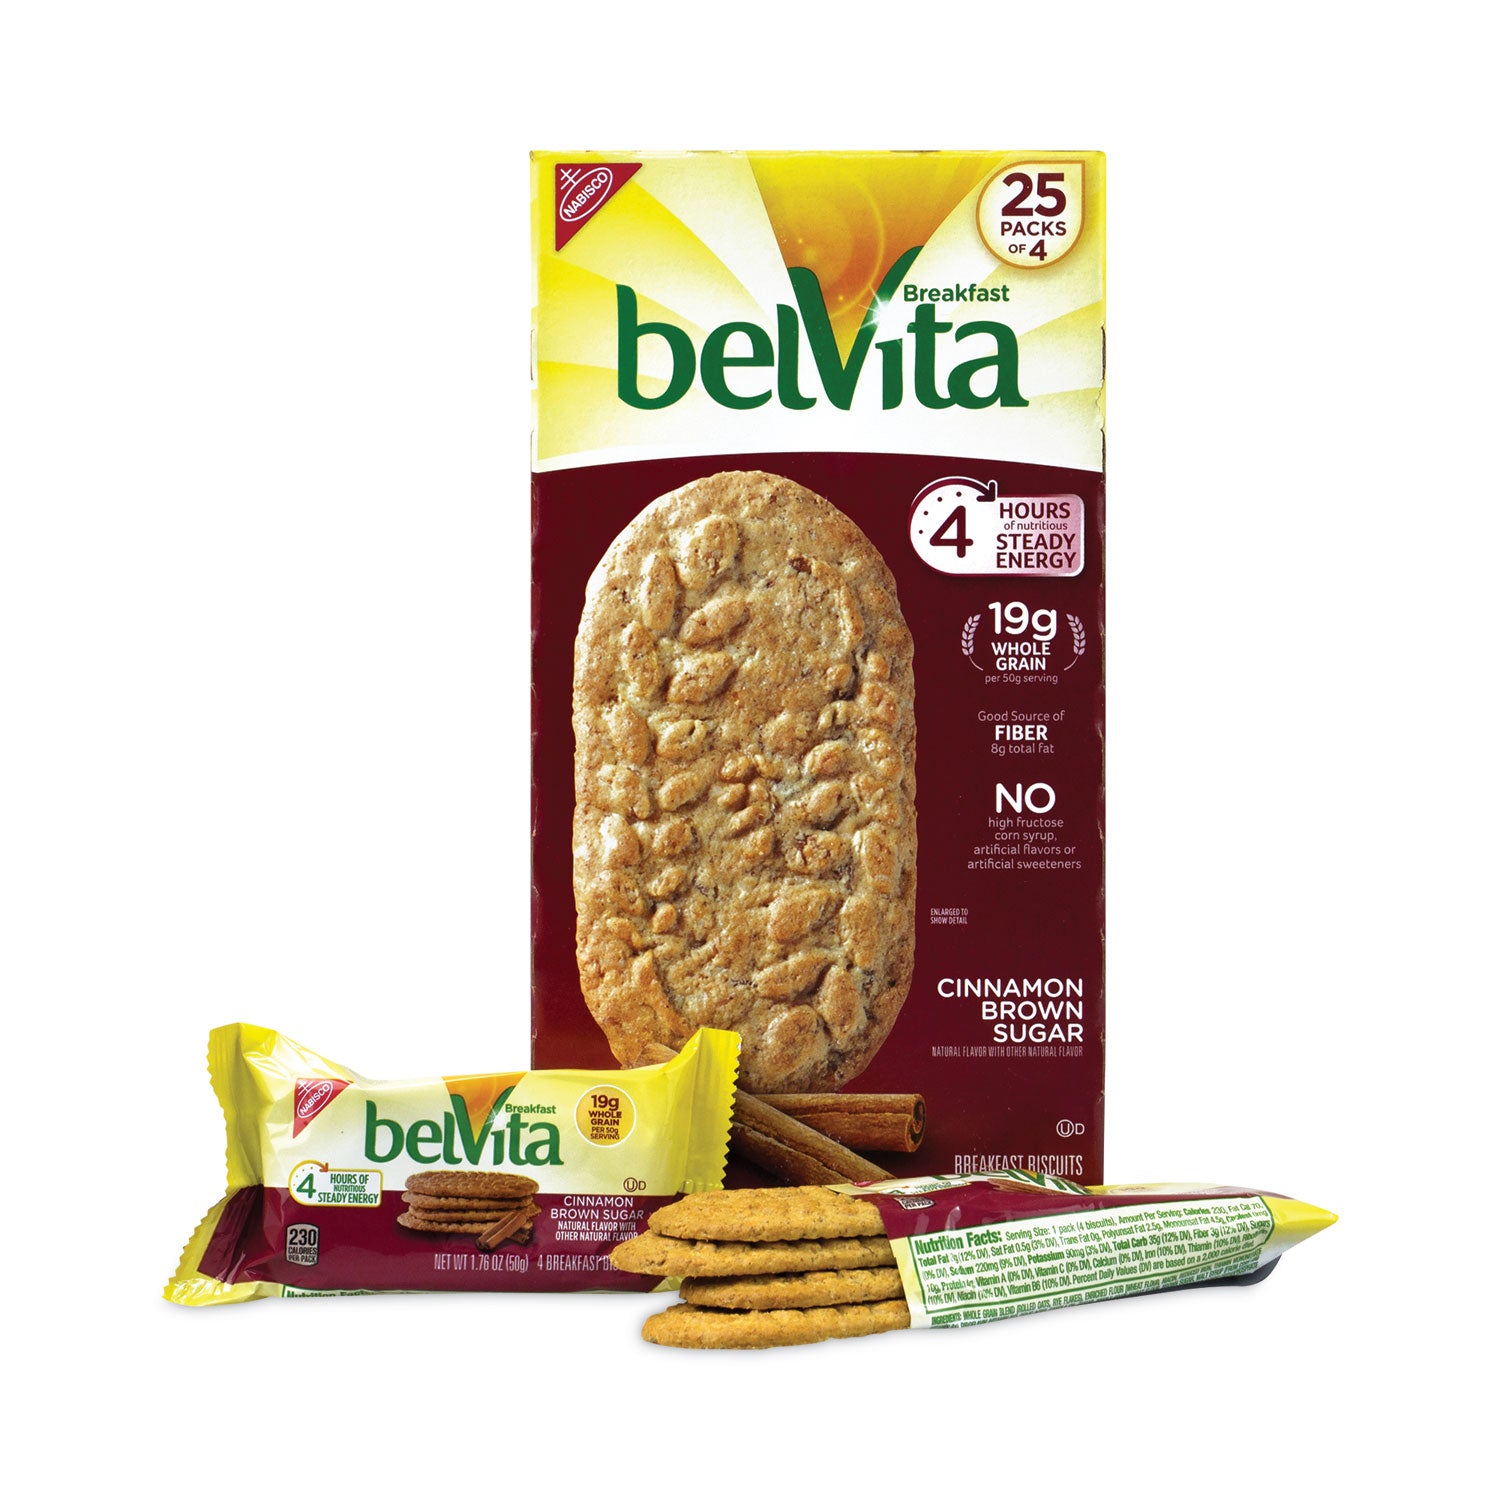 belvita-breakfast-biscuits-cinnamon-brown-sugar-176-oz-pack-25-packs-carton-ships-in-1-3-business-days_grr22000507 - 2